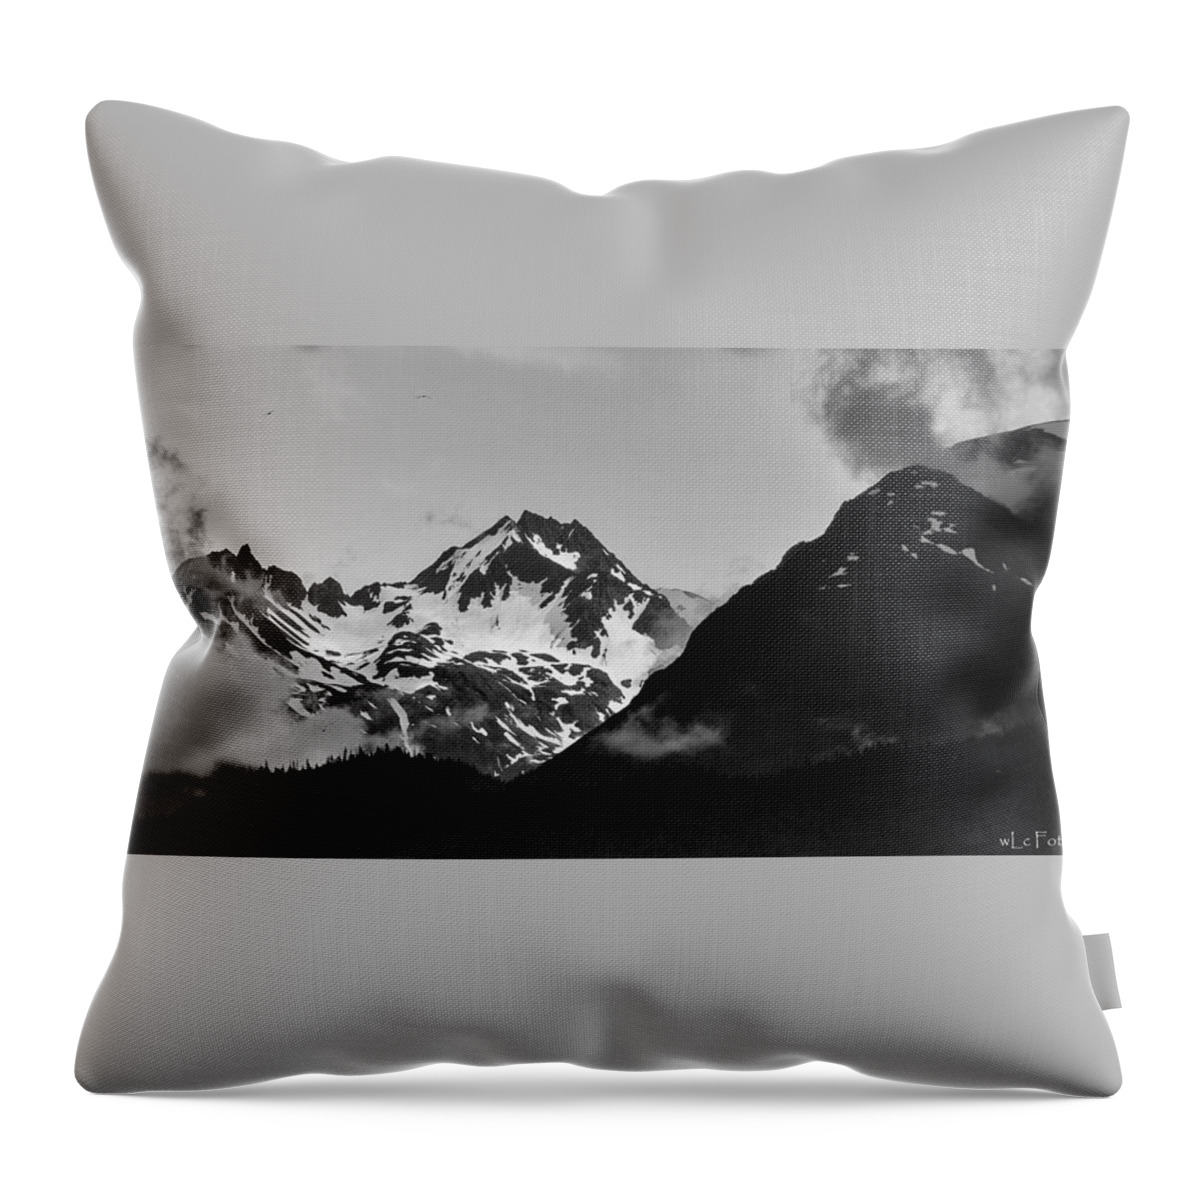 Mountains Throw Pillow featuring the photograph Alaskan Mountain Range by Wendy Carrington